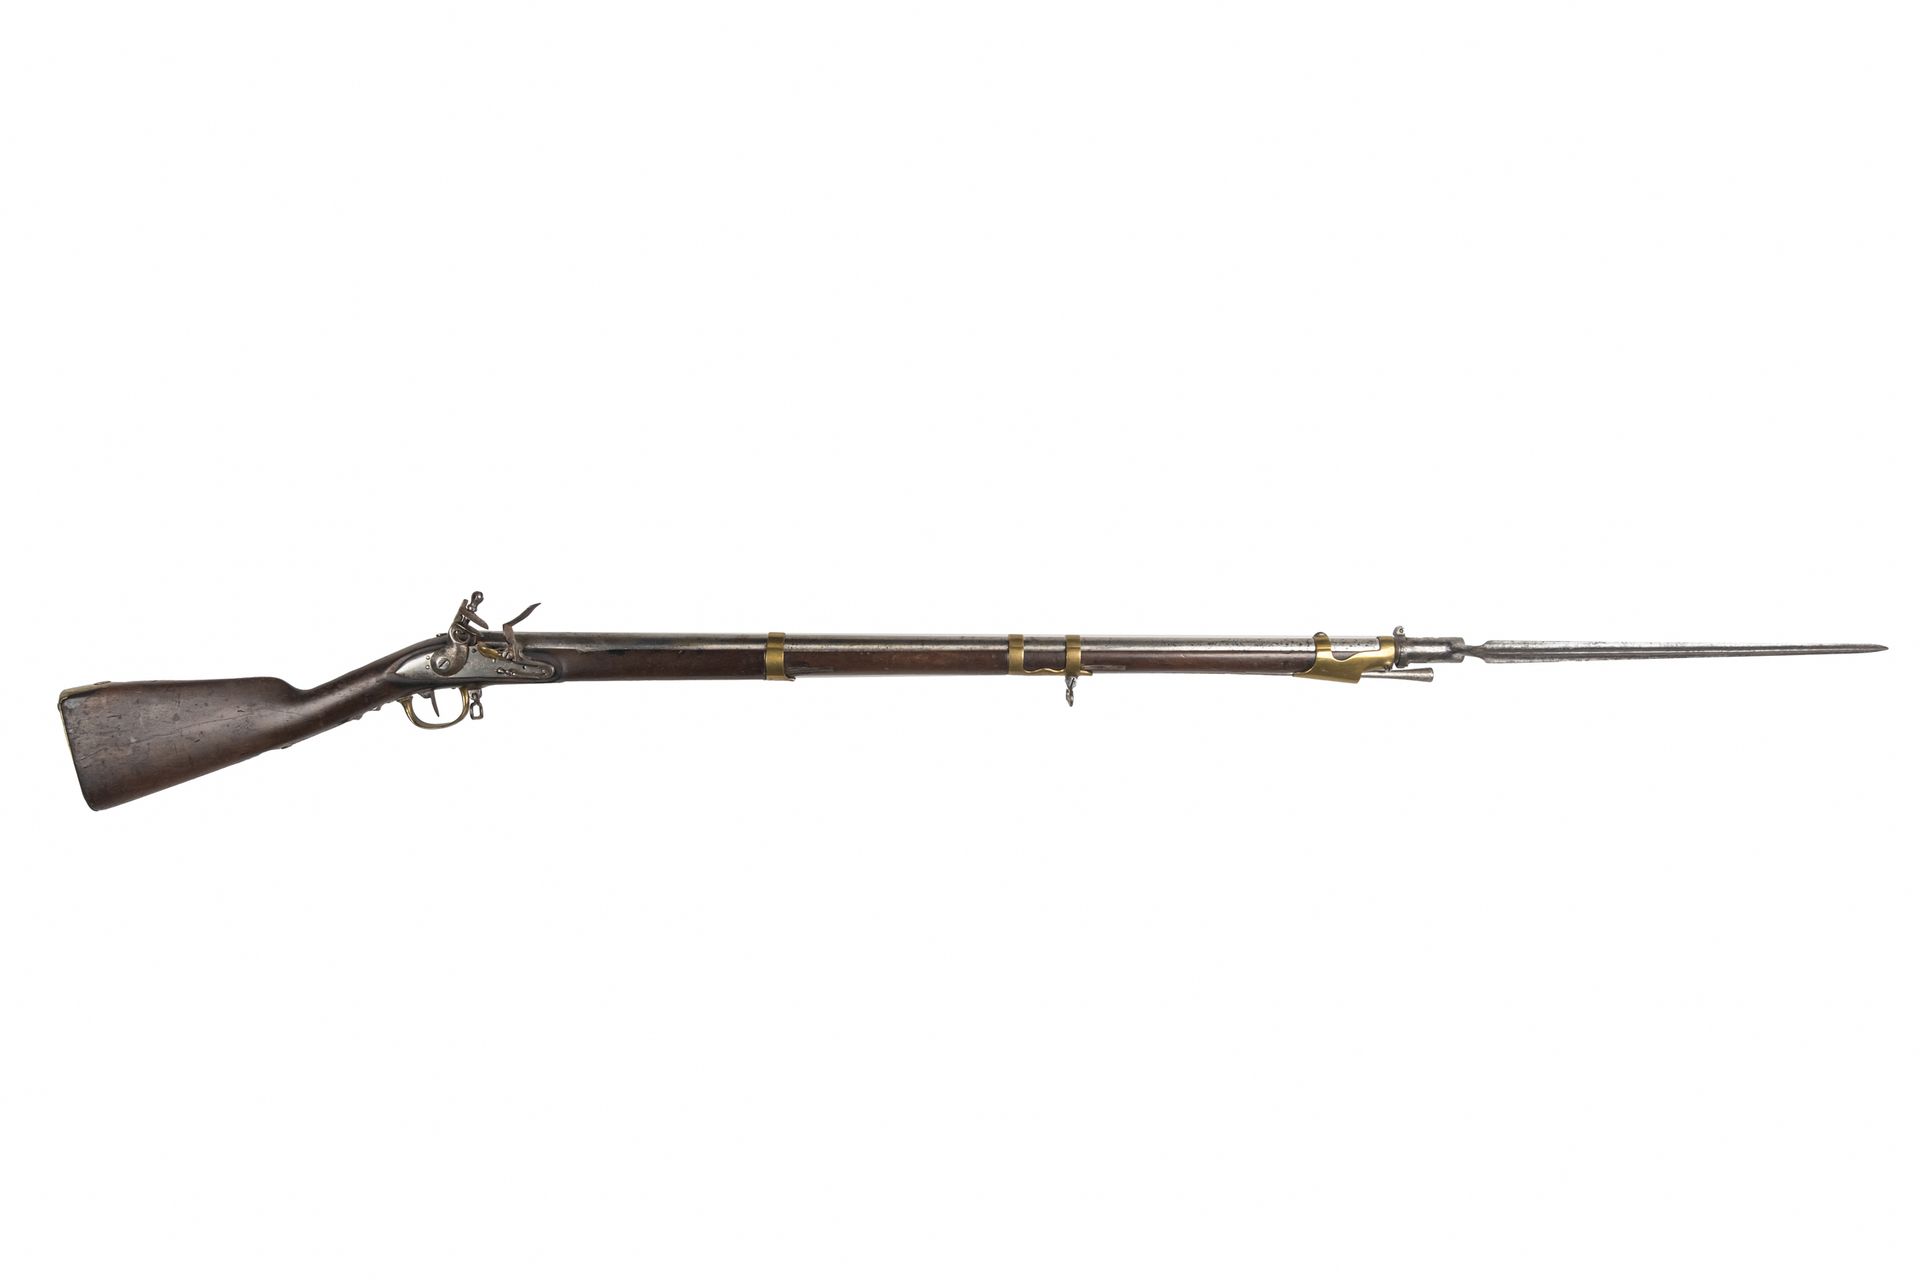 Null Fusil de artillería de chispa modelo 1777. 

Cañón redondo con rayos y fech&hellip;